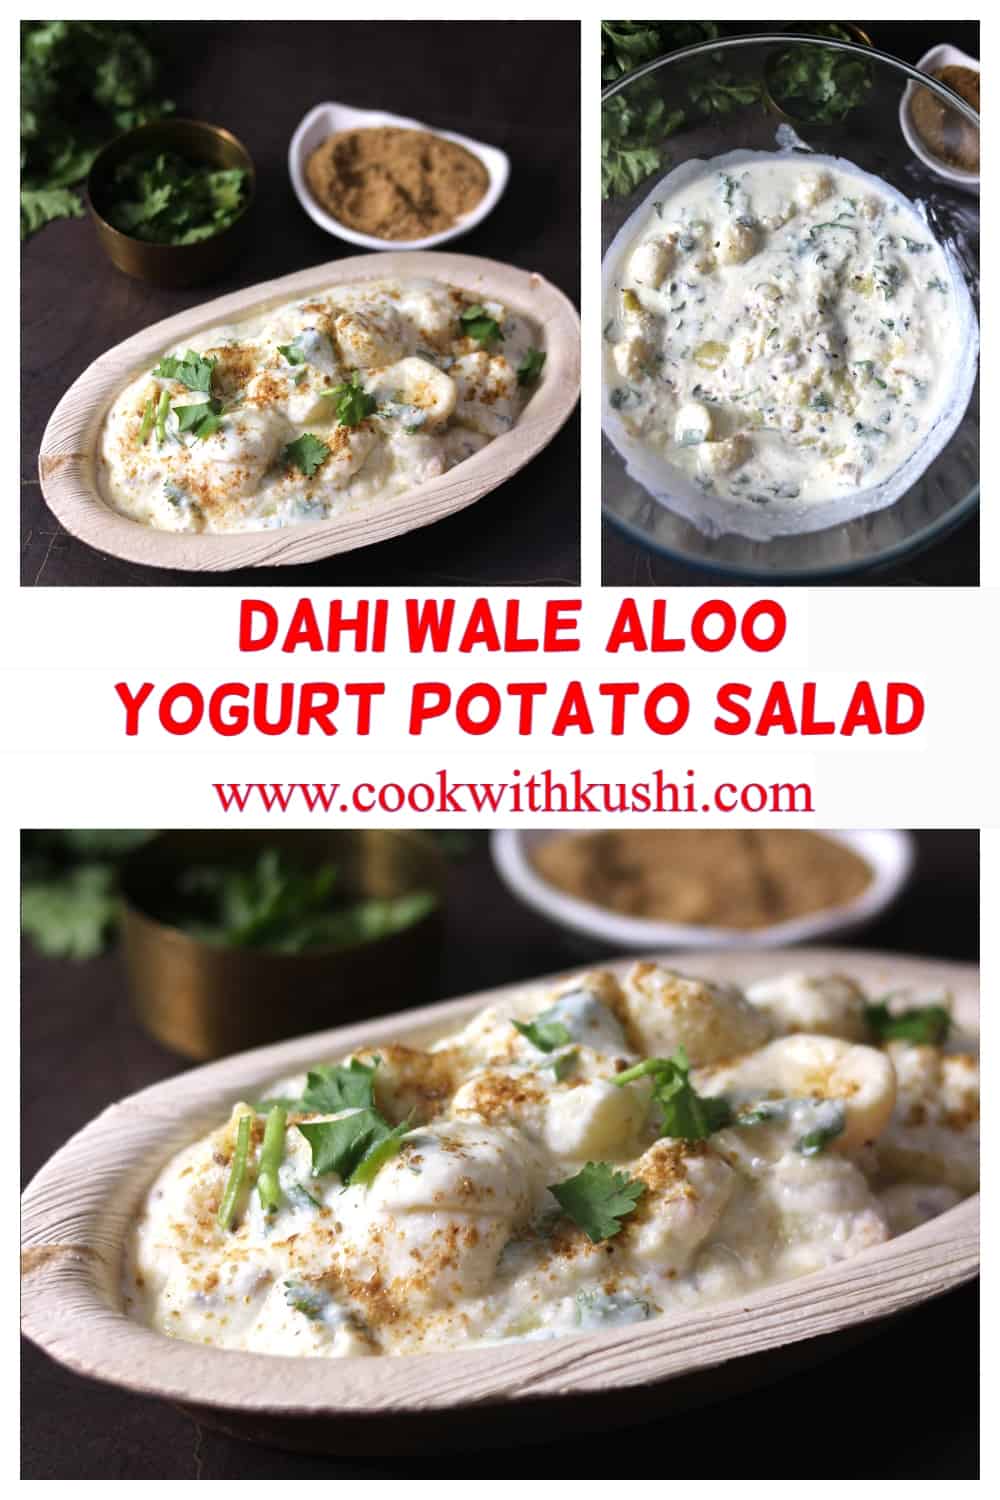 3 different images of dahi aloo recipe, indian yogurt and mashed potato salad